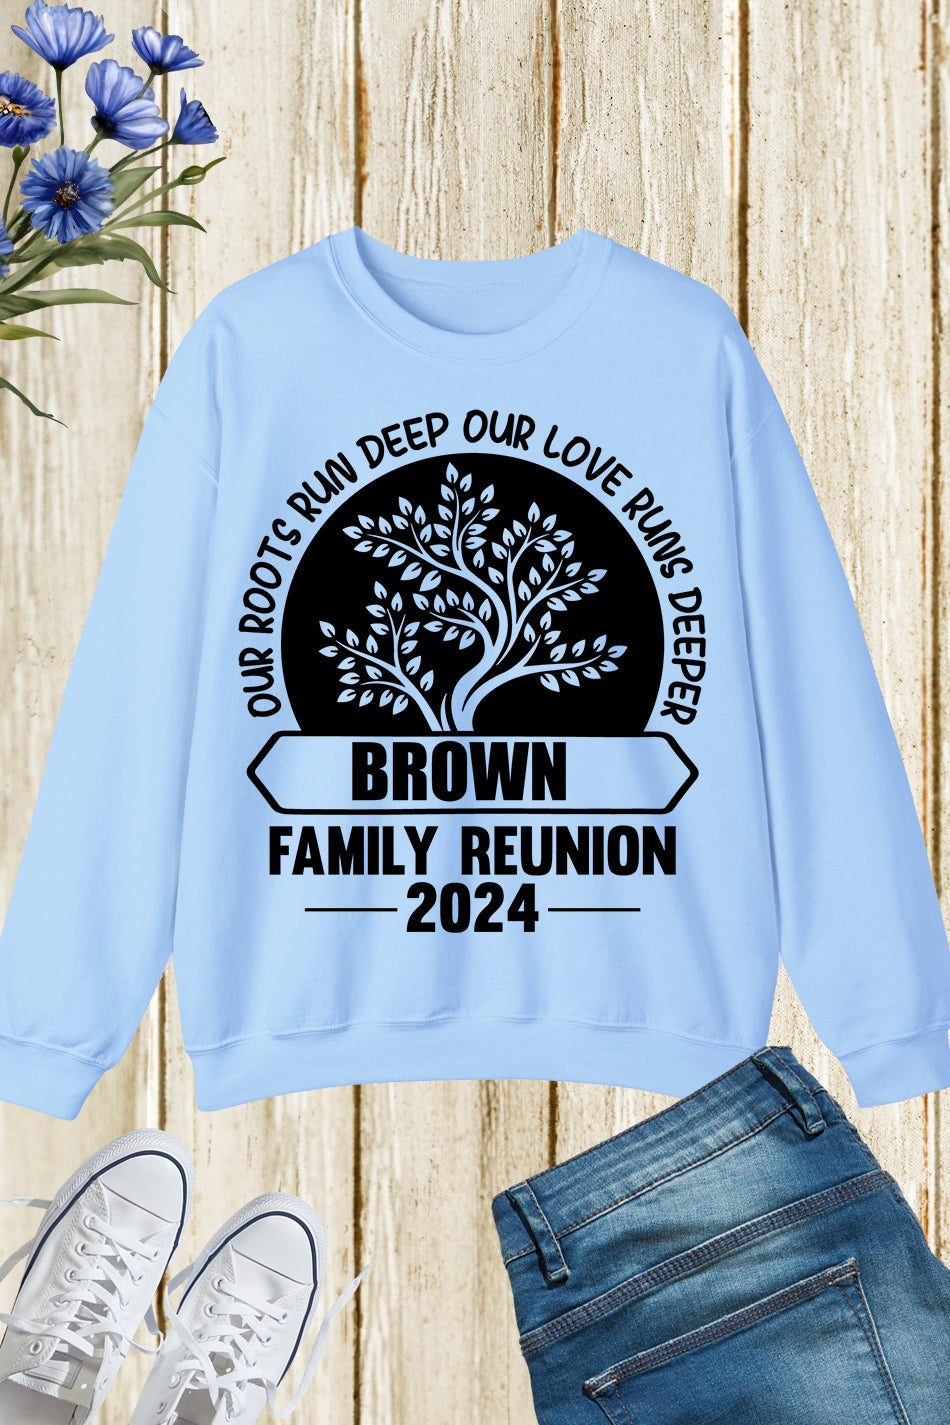 Our Roots Run Deep Our Love Runs Deeper Custom Family Reunion Sweatshirts